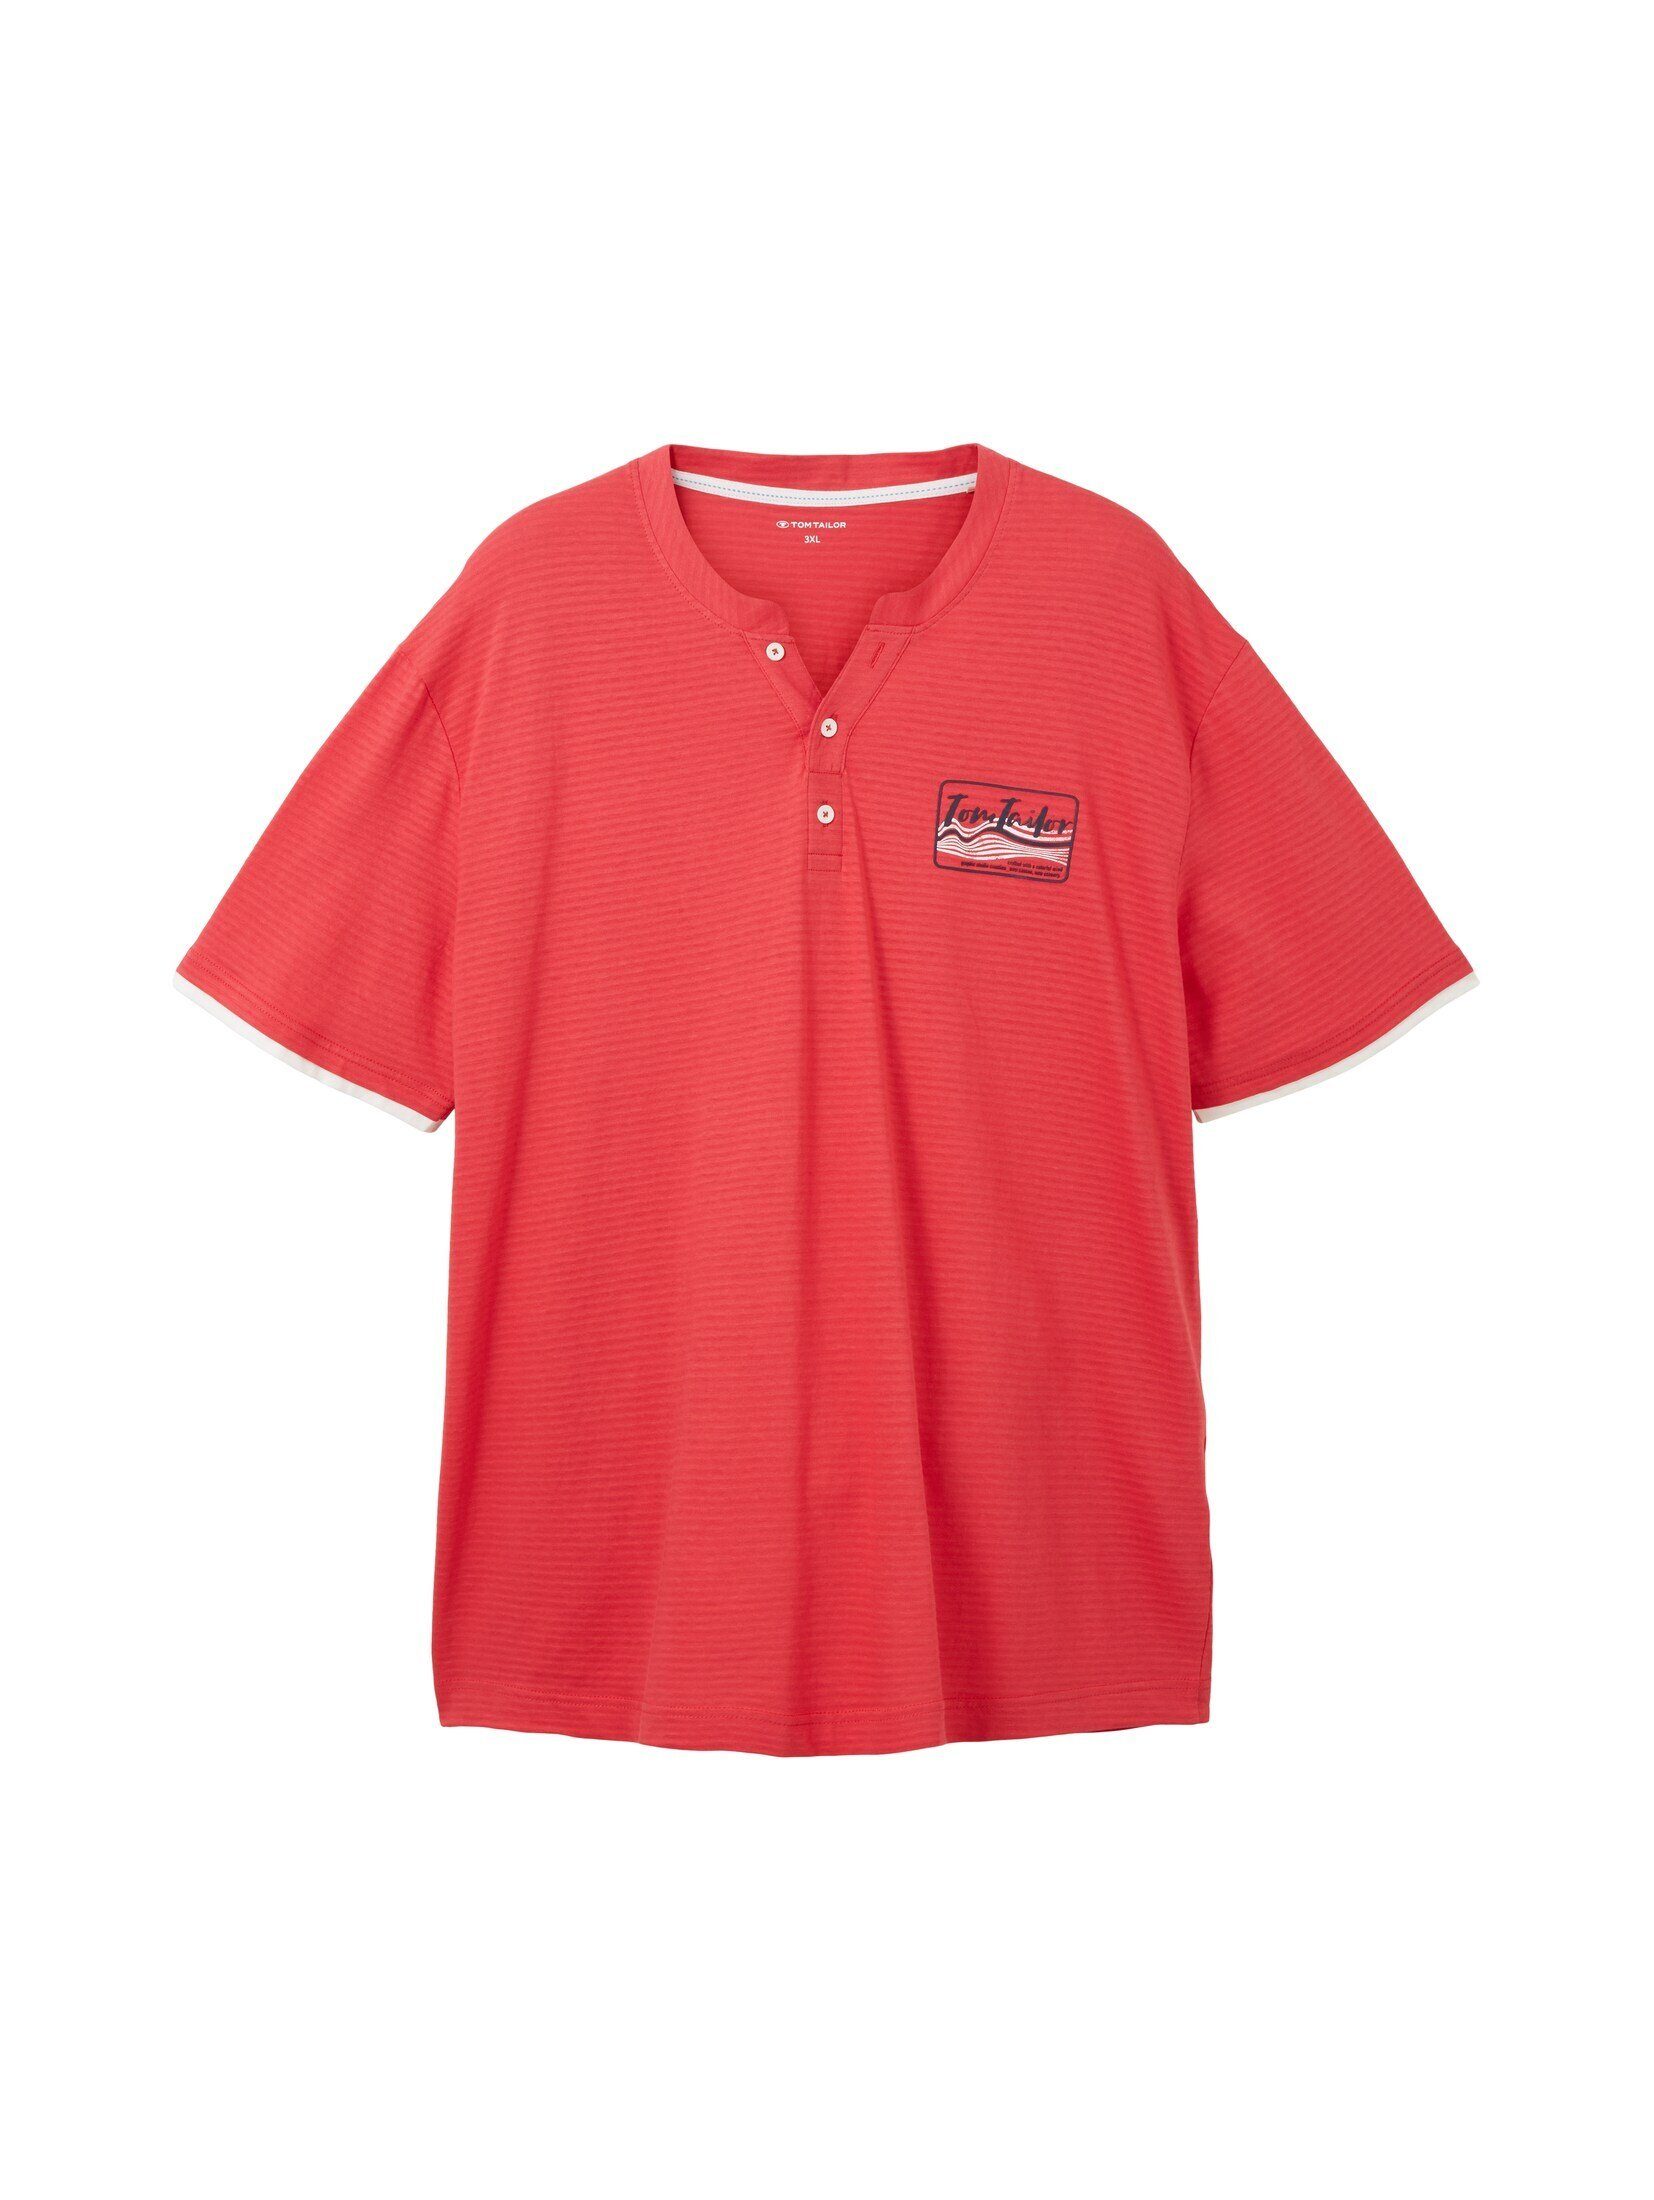 PLUS T-Shirt soft red Gestreiftes berry T-Shirt TAILOR - TOM Plus